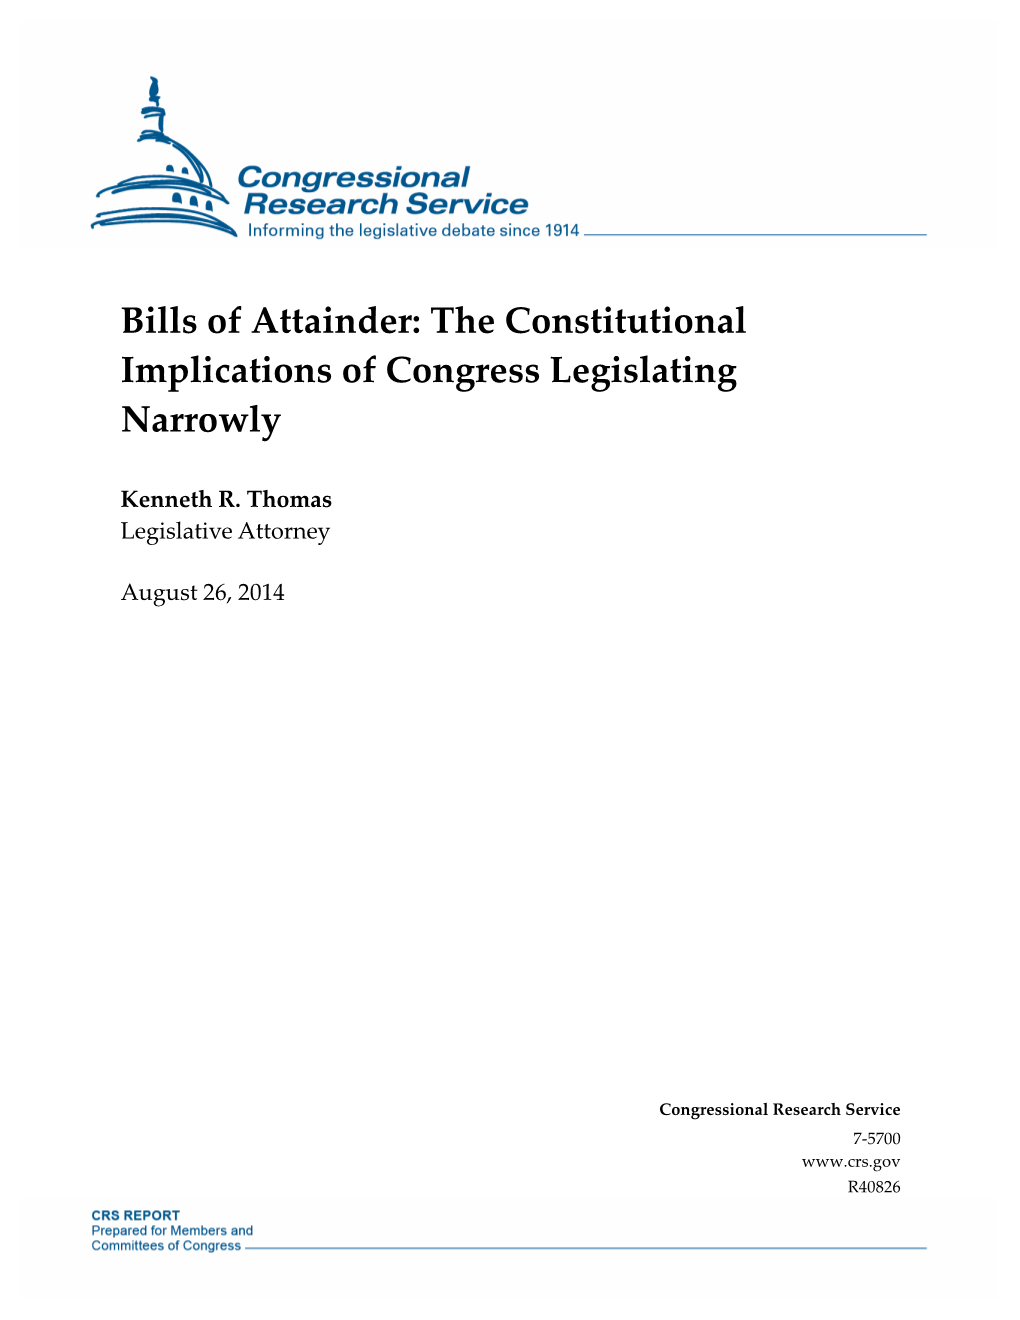 The Constitutional Implications of Congress Legislating Narrowly